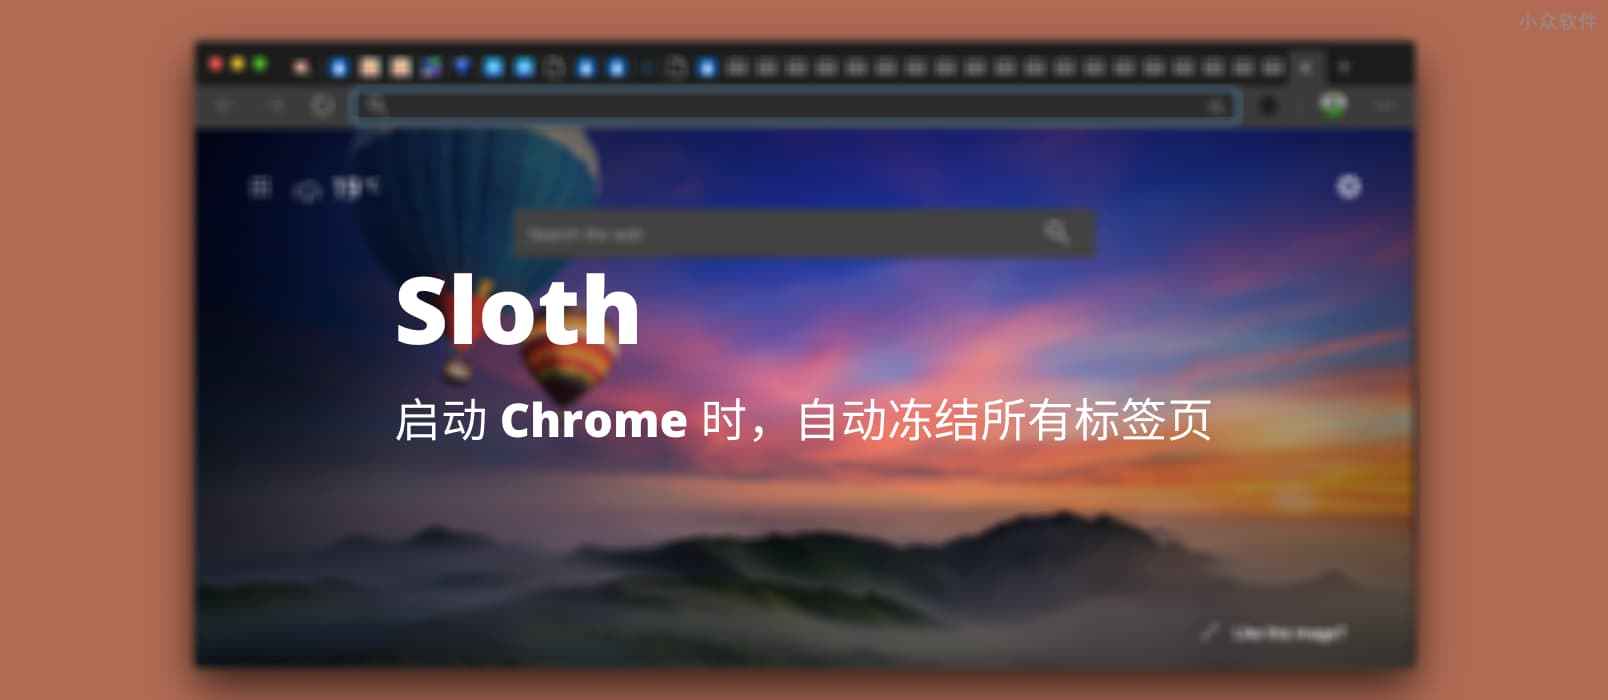 Sloth - 启动 Chrome 时，自动冻结所有标签页，减少内存占用 1